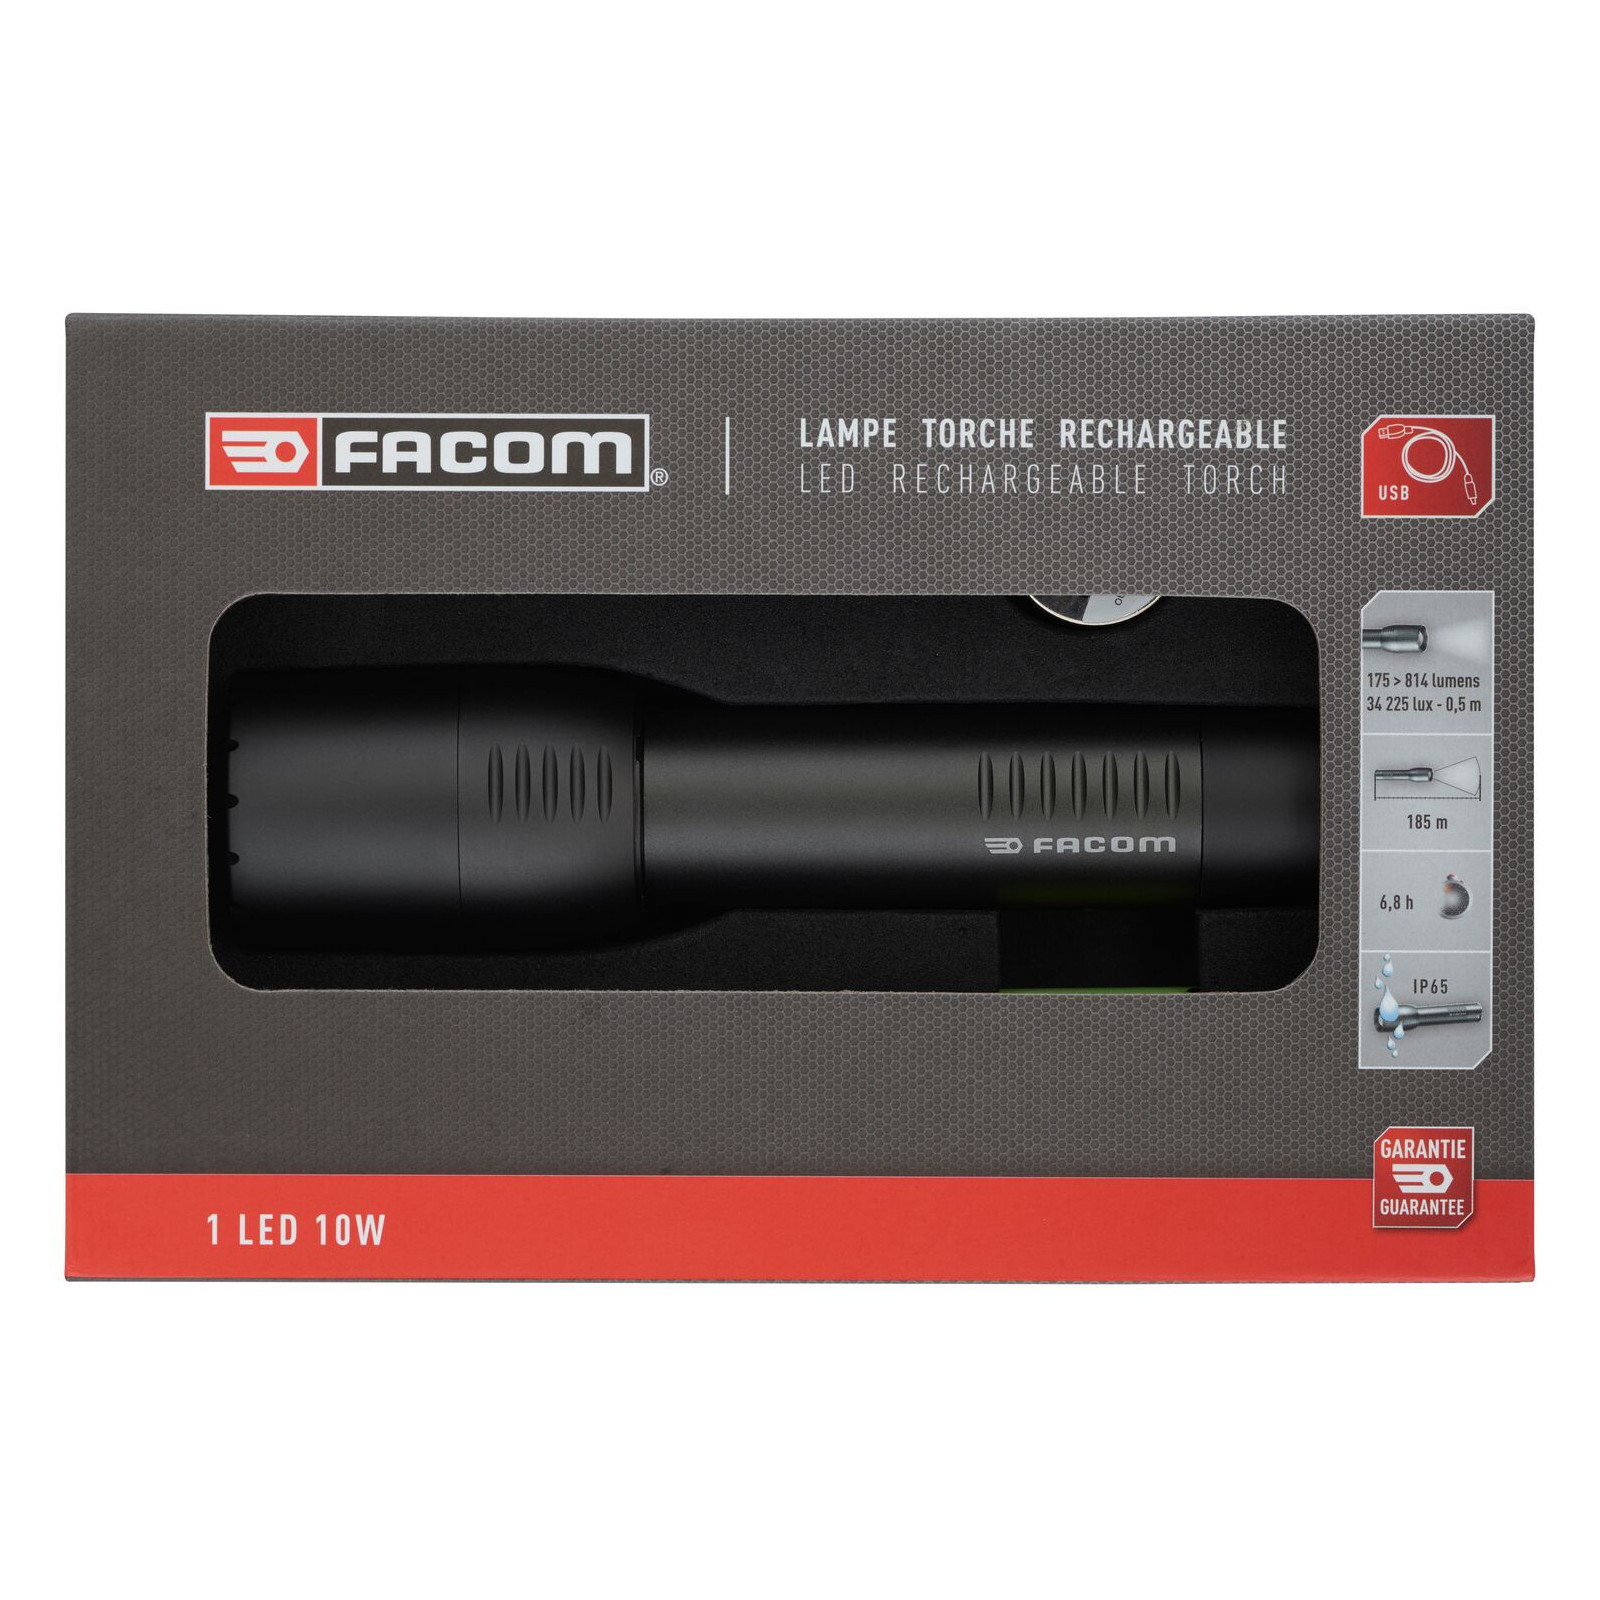 Facom - Lampe torche compacte rechargeable Facom - Lampes